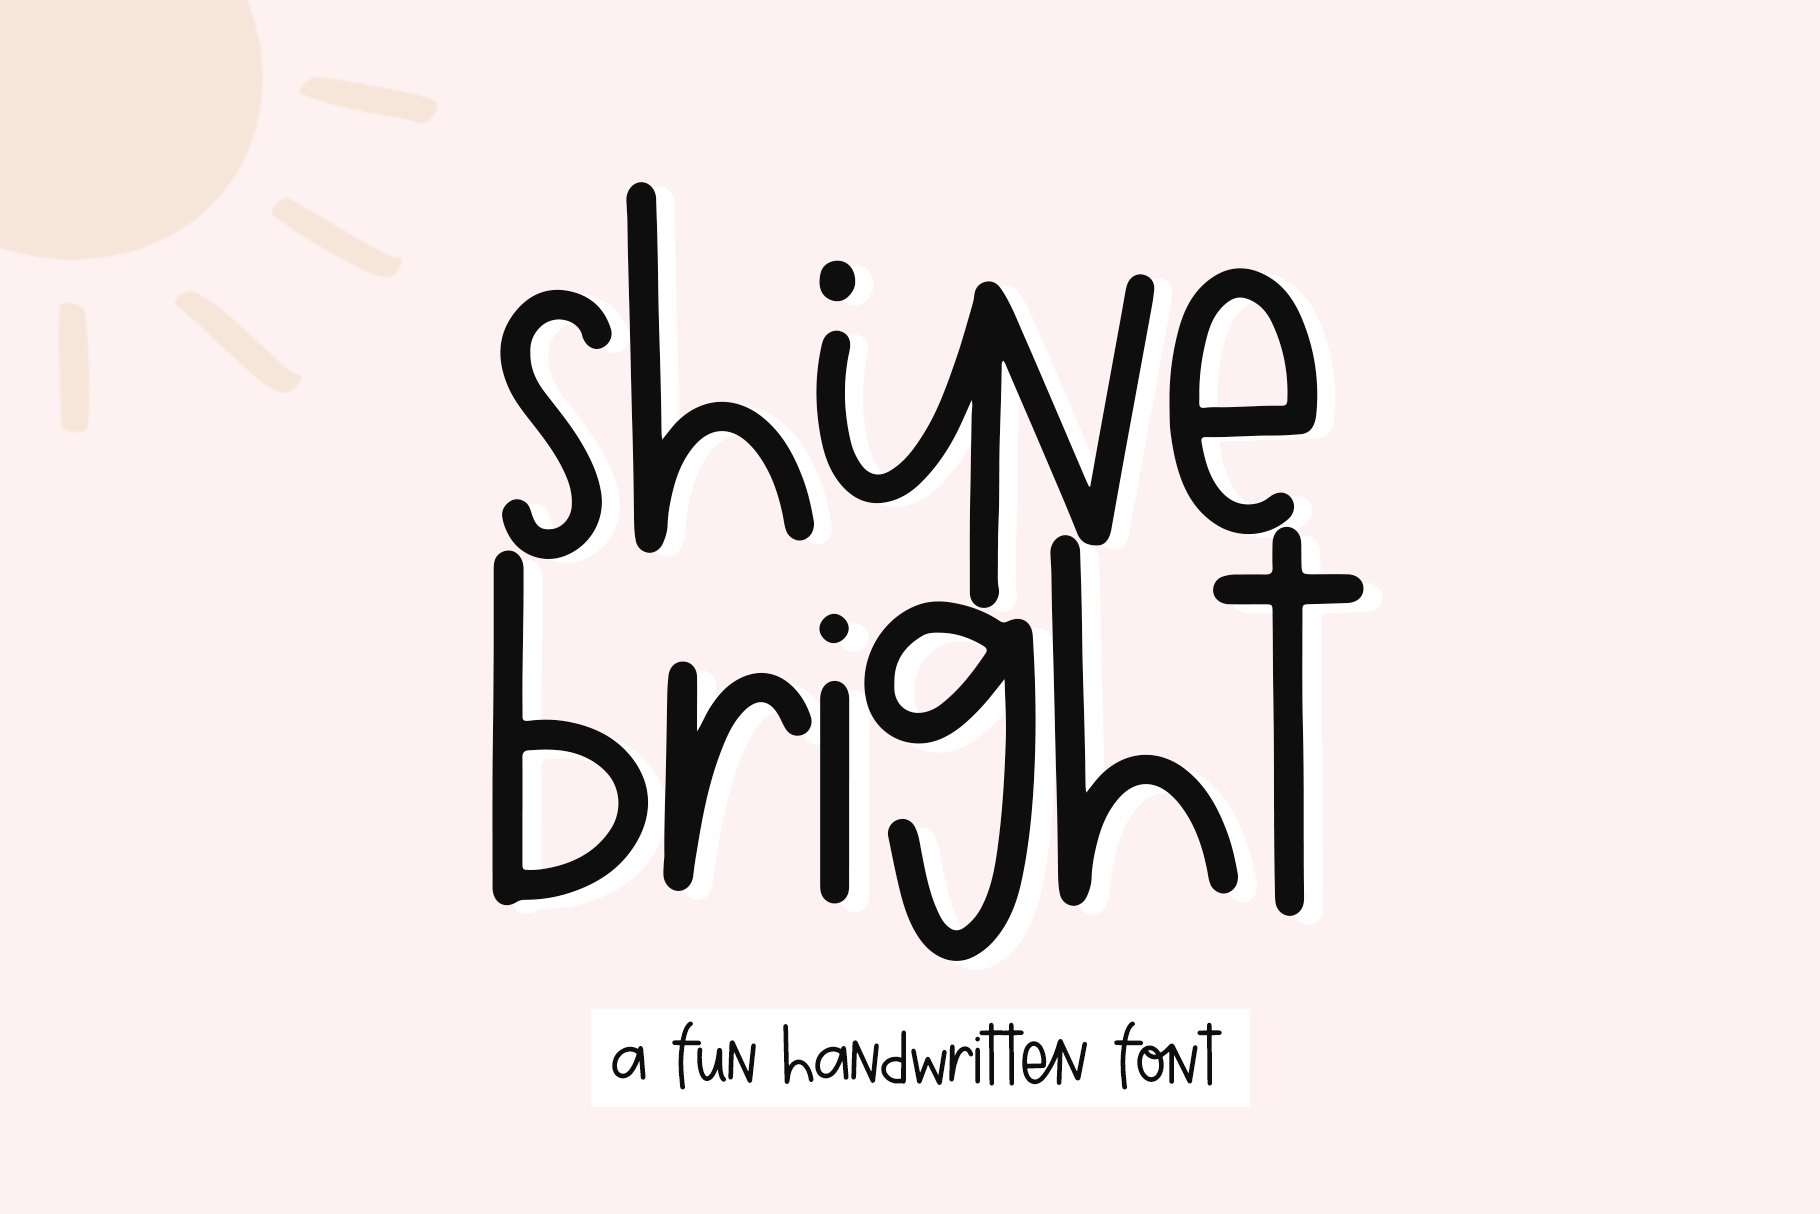 Shine Bright | Fun Handwritten Font cover image.